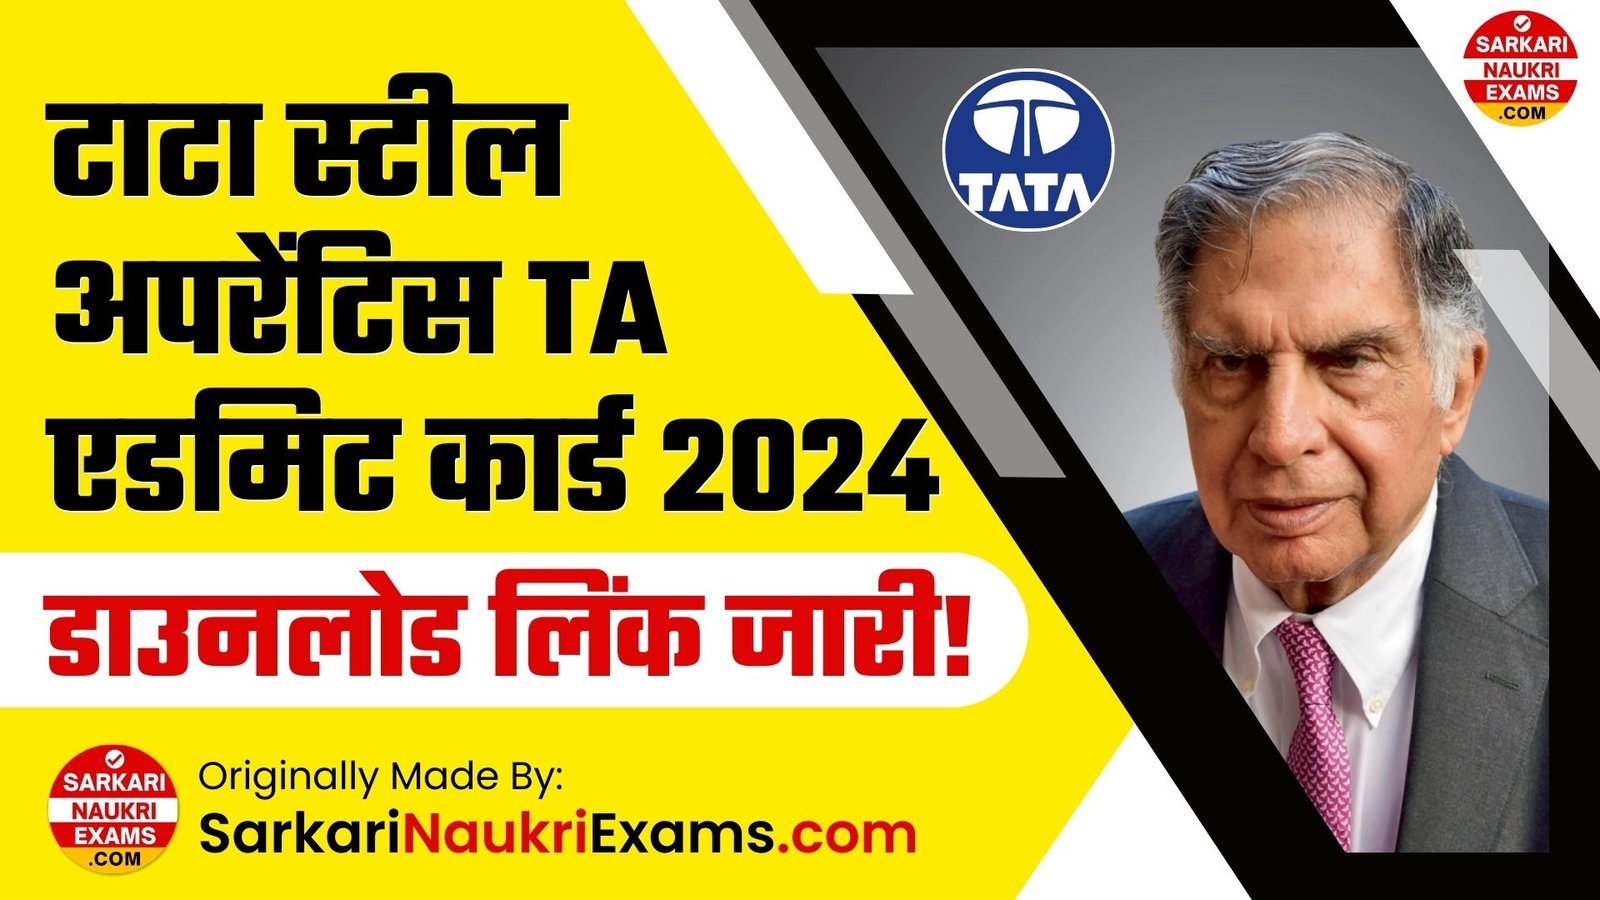 Tata Steel Electrician Recruitment 2018-2019 Online Application Form